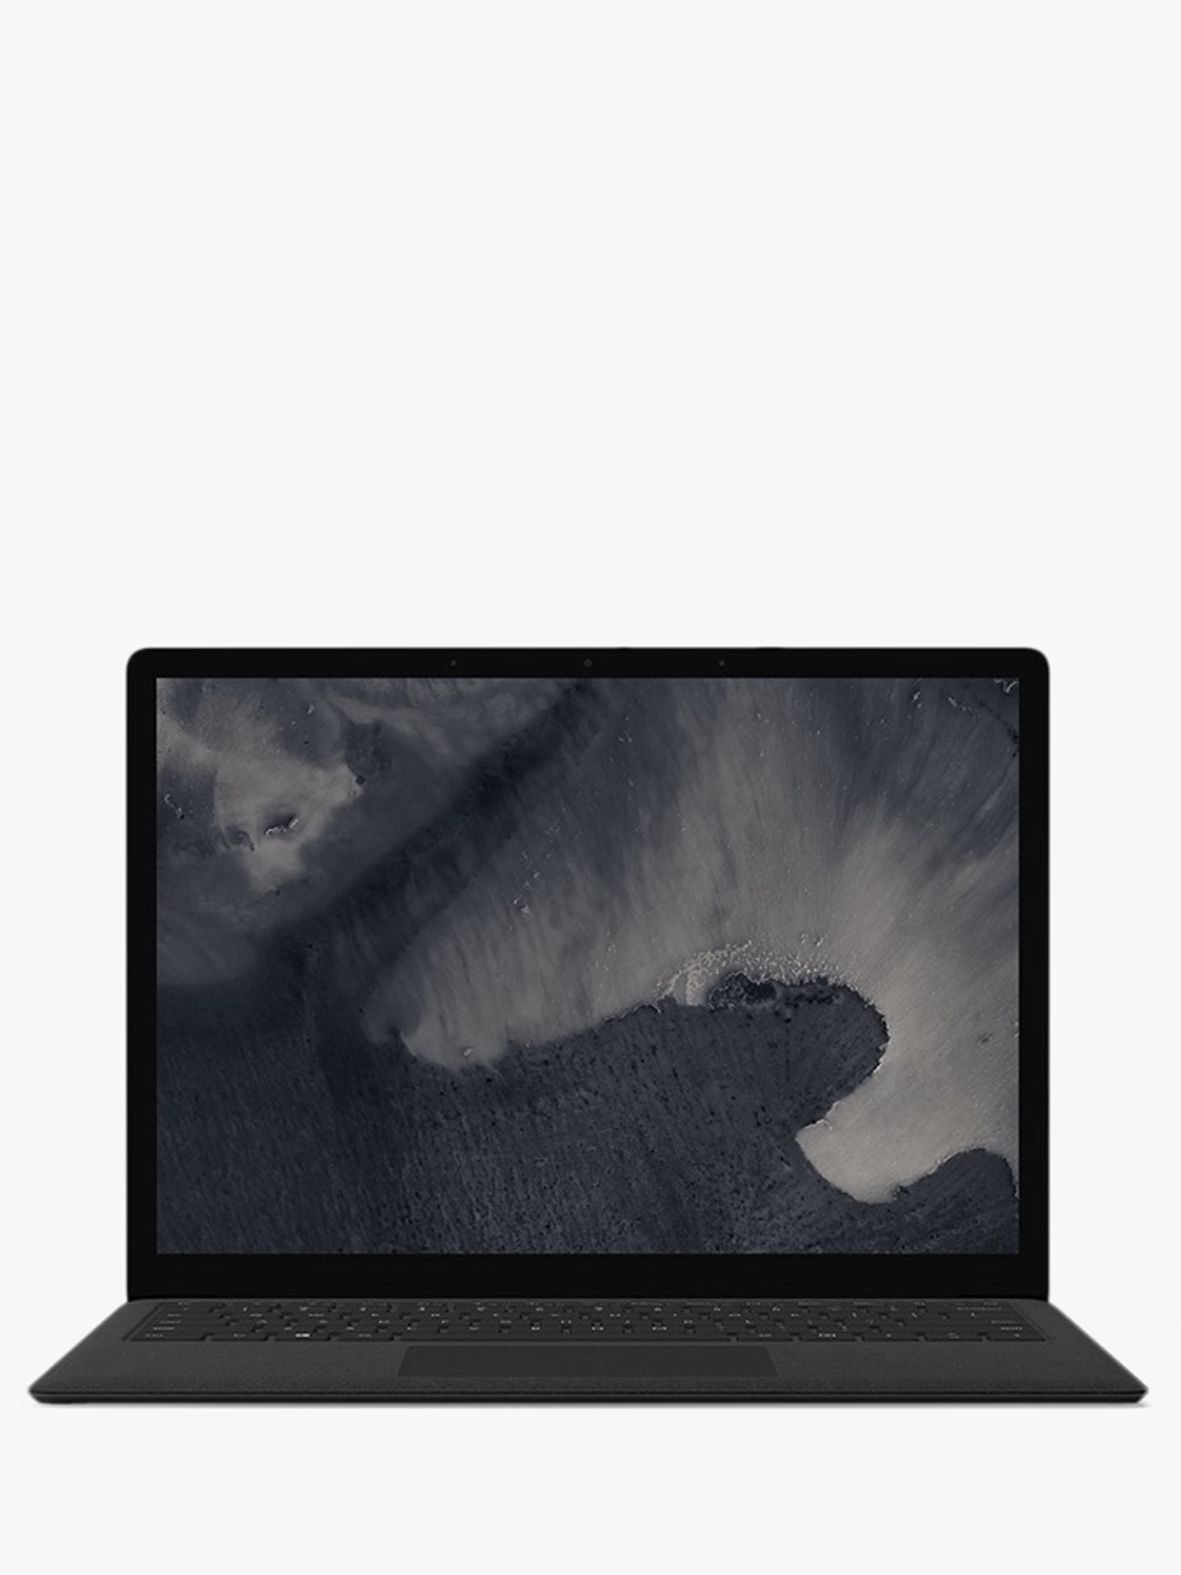 Microsoft Surface Laptop 2, Intel Core i5, 8GB RAM, 256GB SSD, 13.5 PixelSense Display